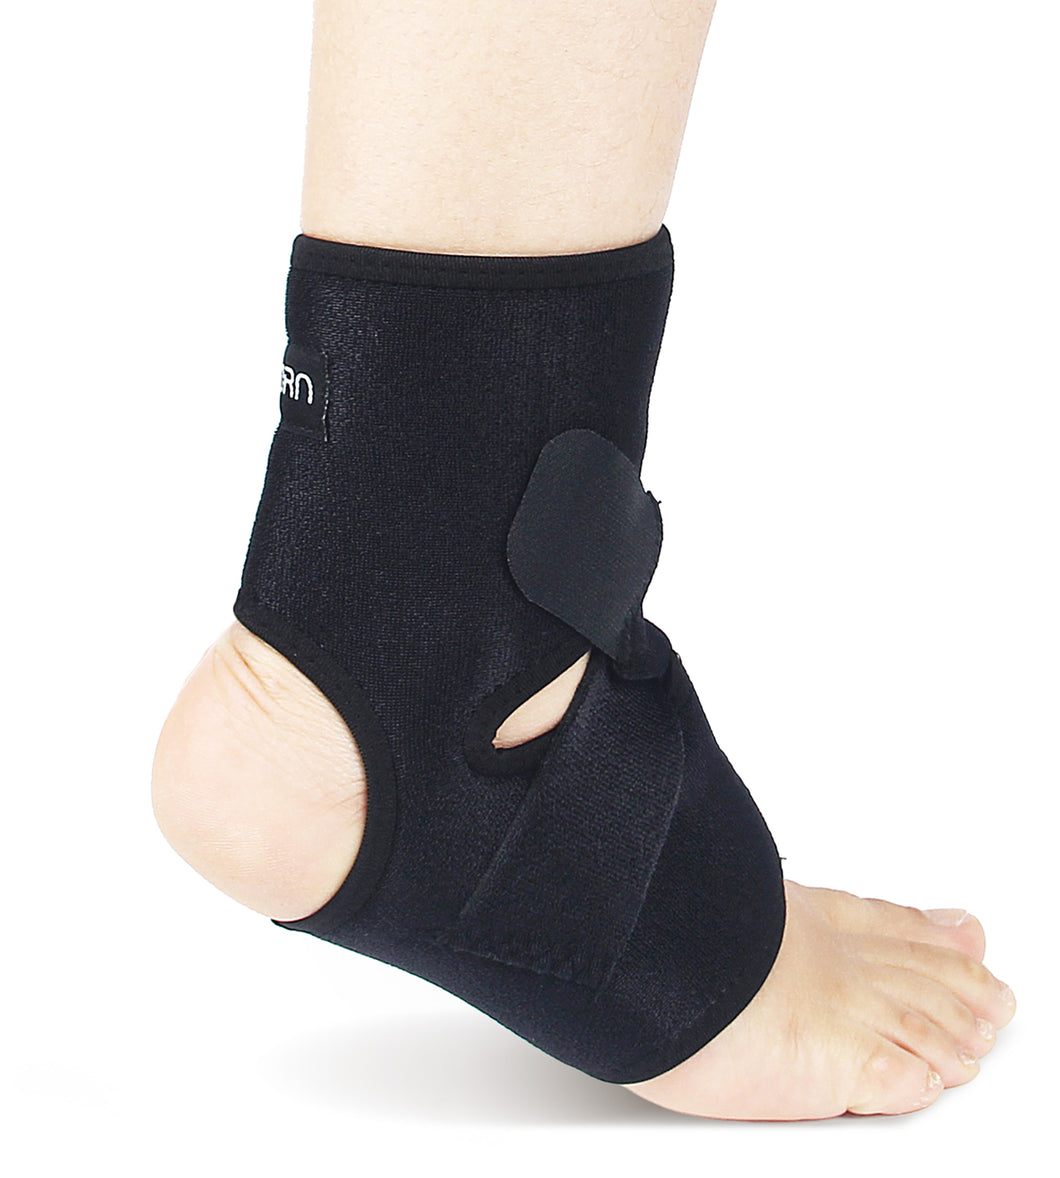 Ankle Brace & Achilles Tendon + Neoprene Support Sleeve by Astorn - Astorn